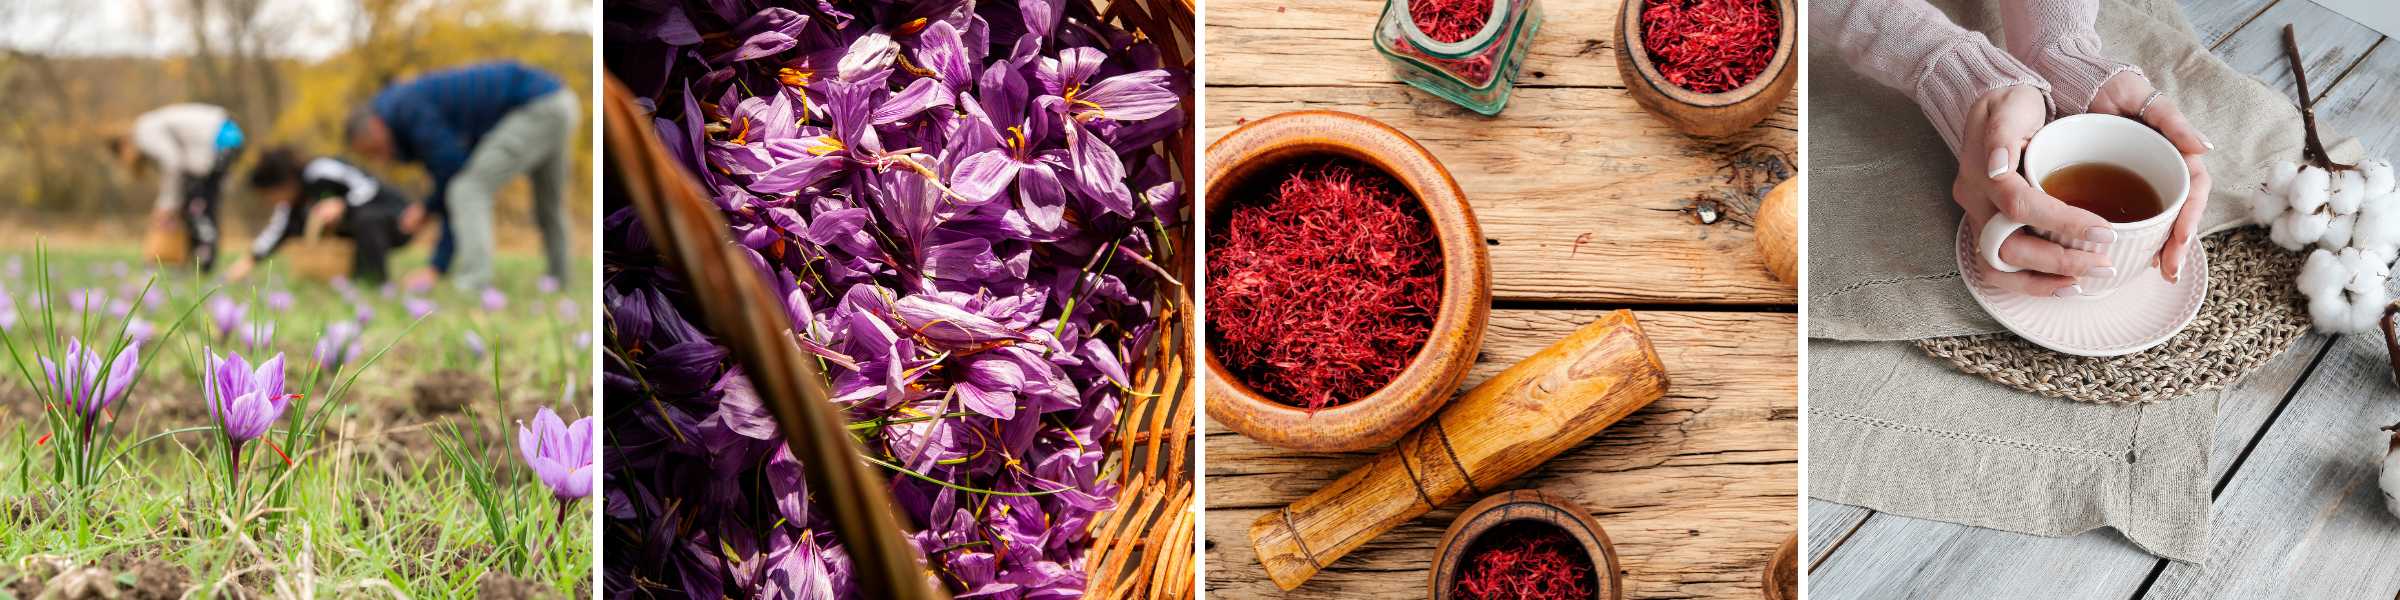 saffron from harvest to tea